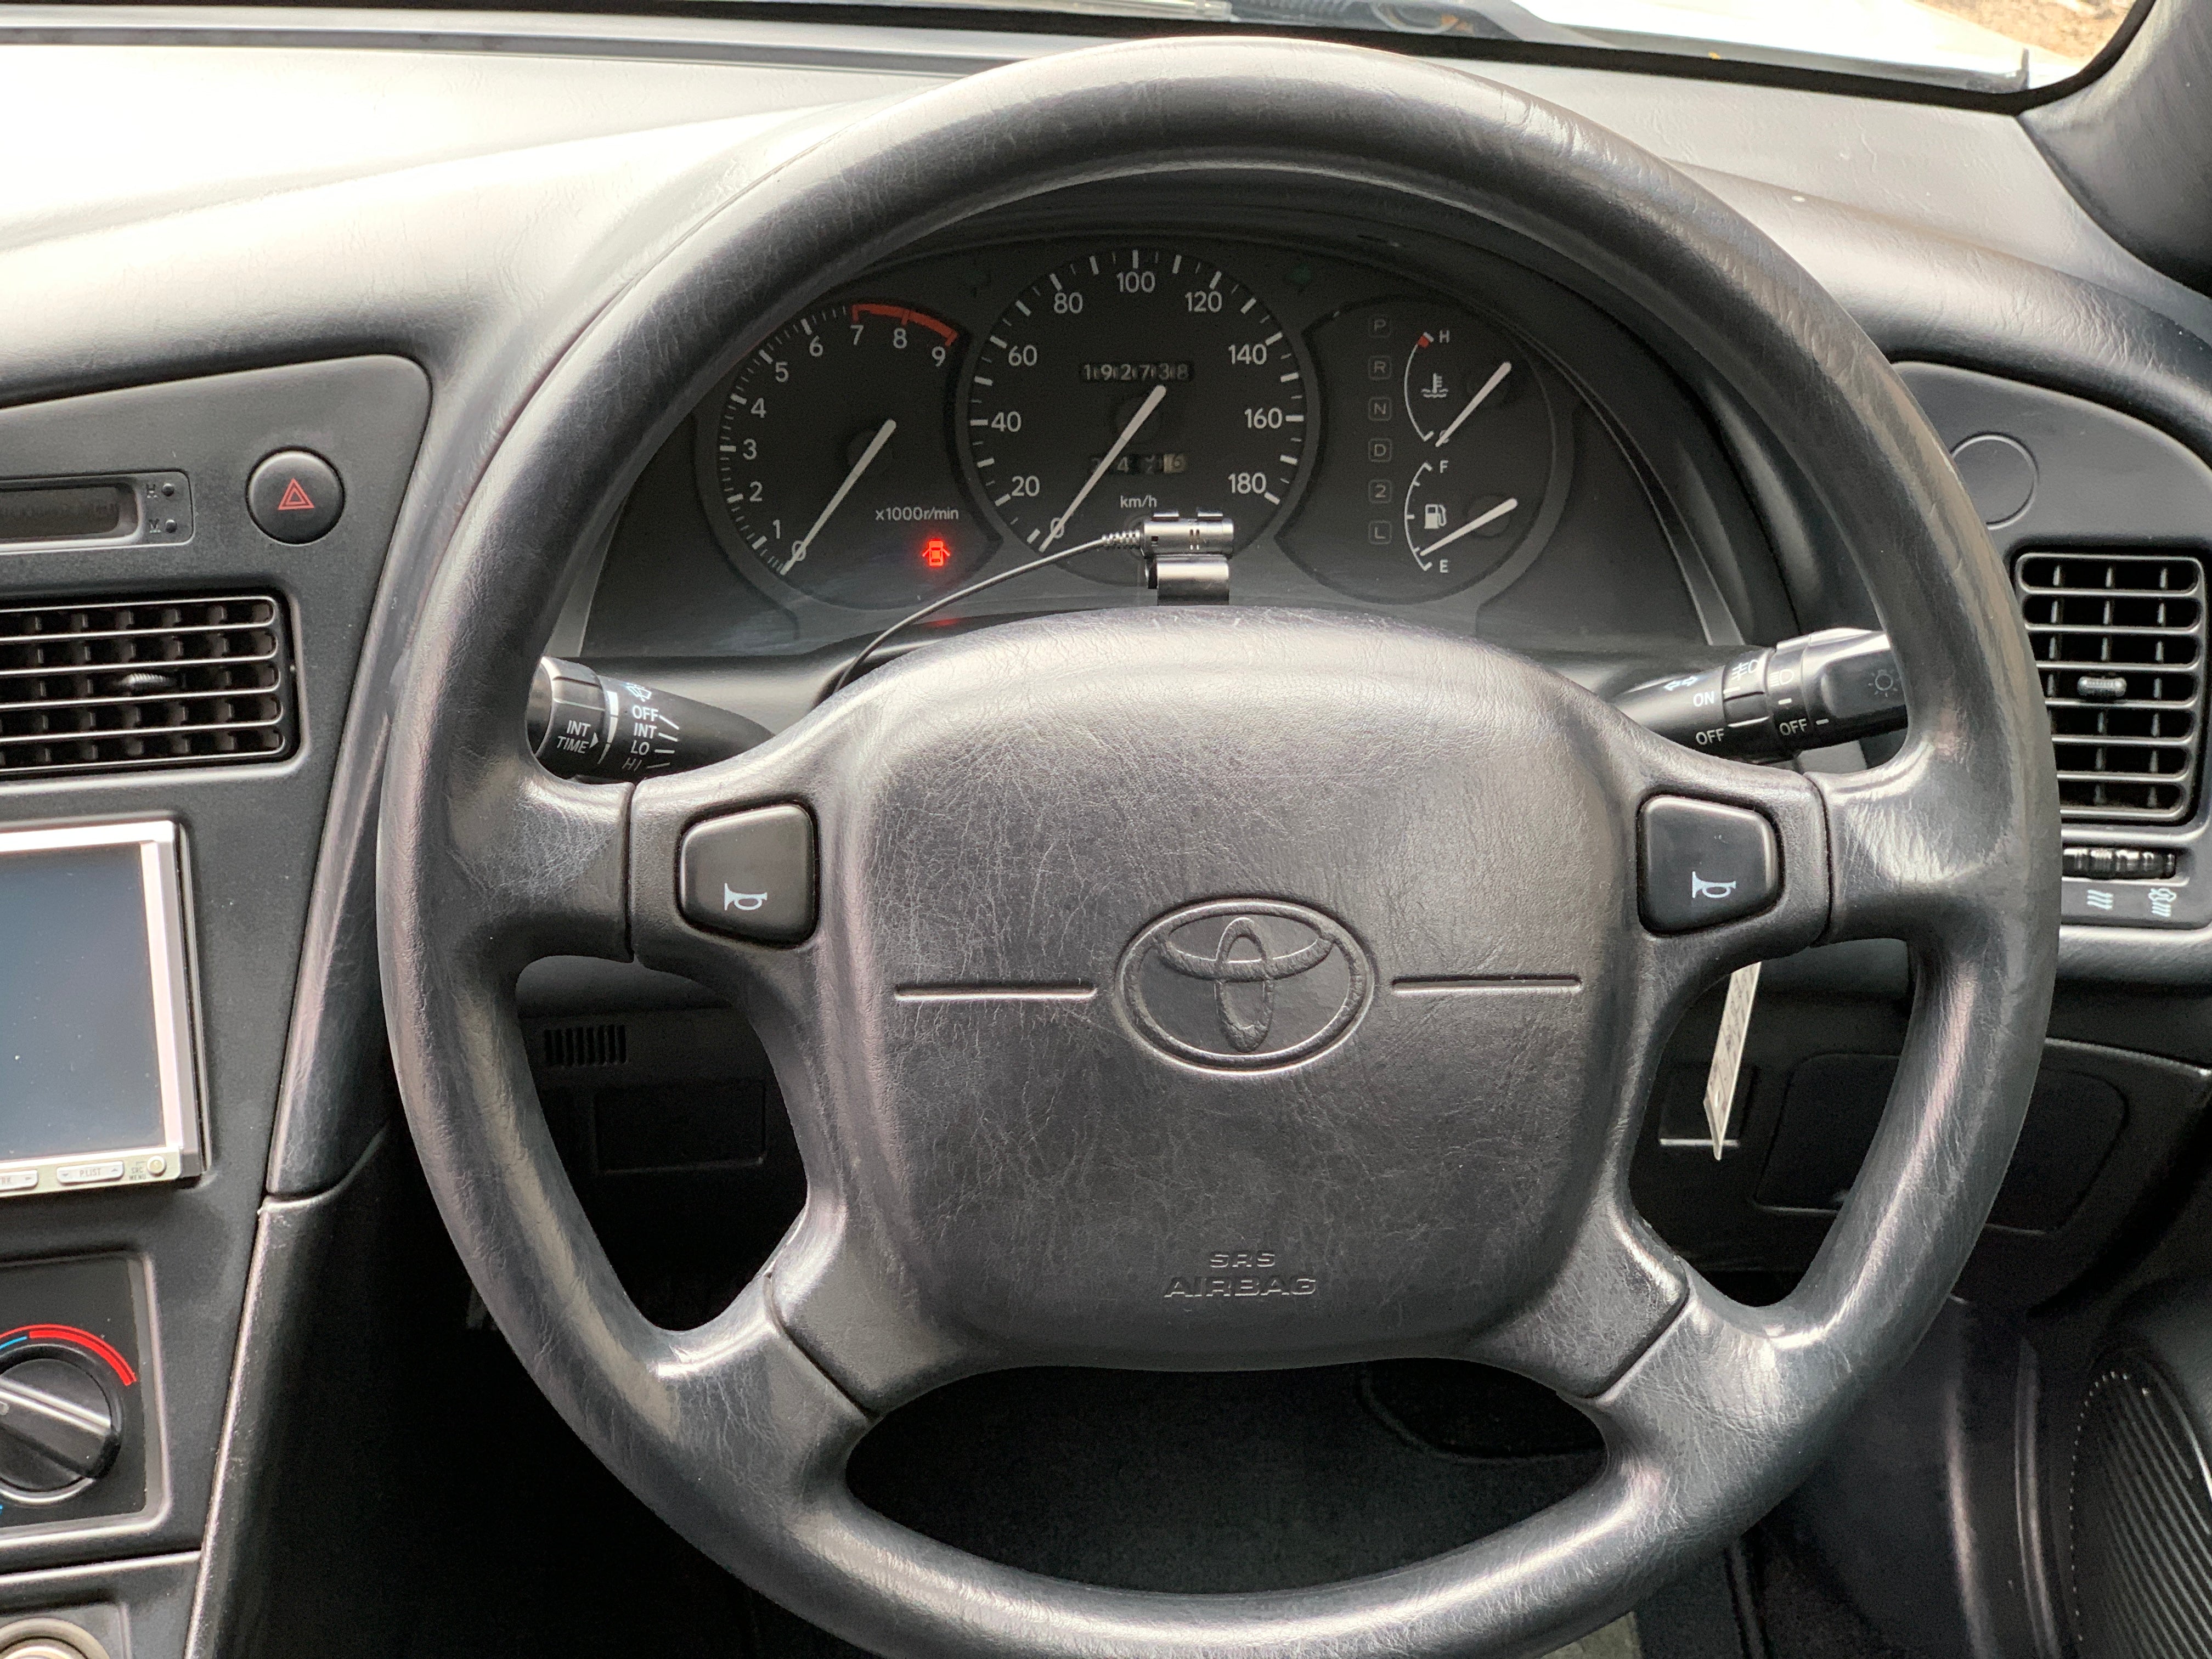 1996 Toyota Celica Convertible